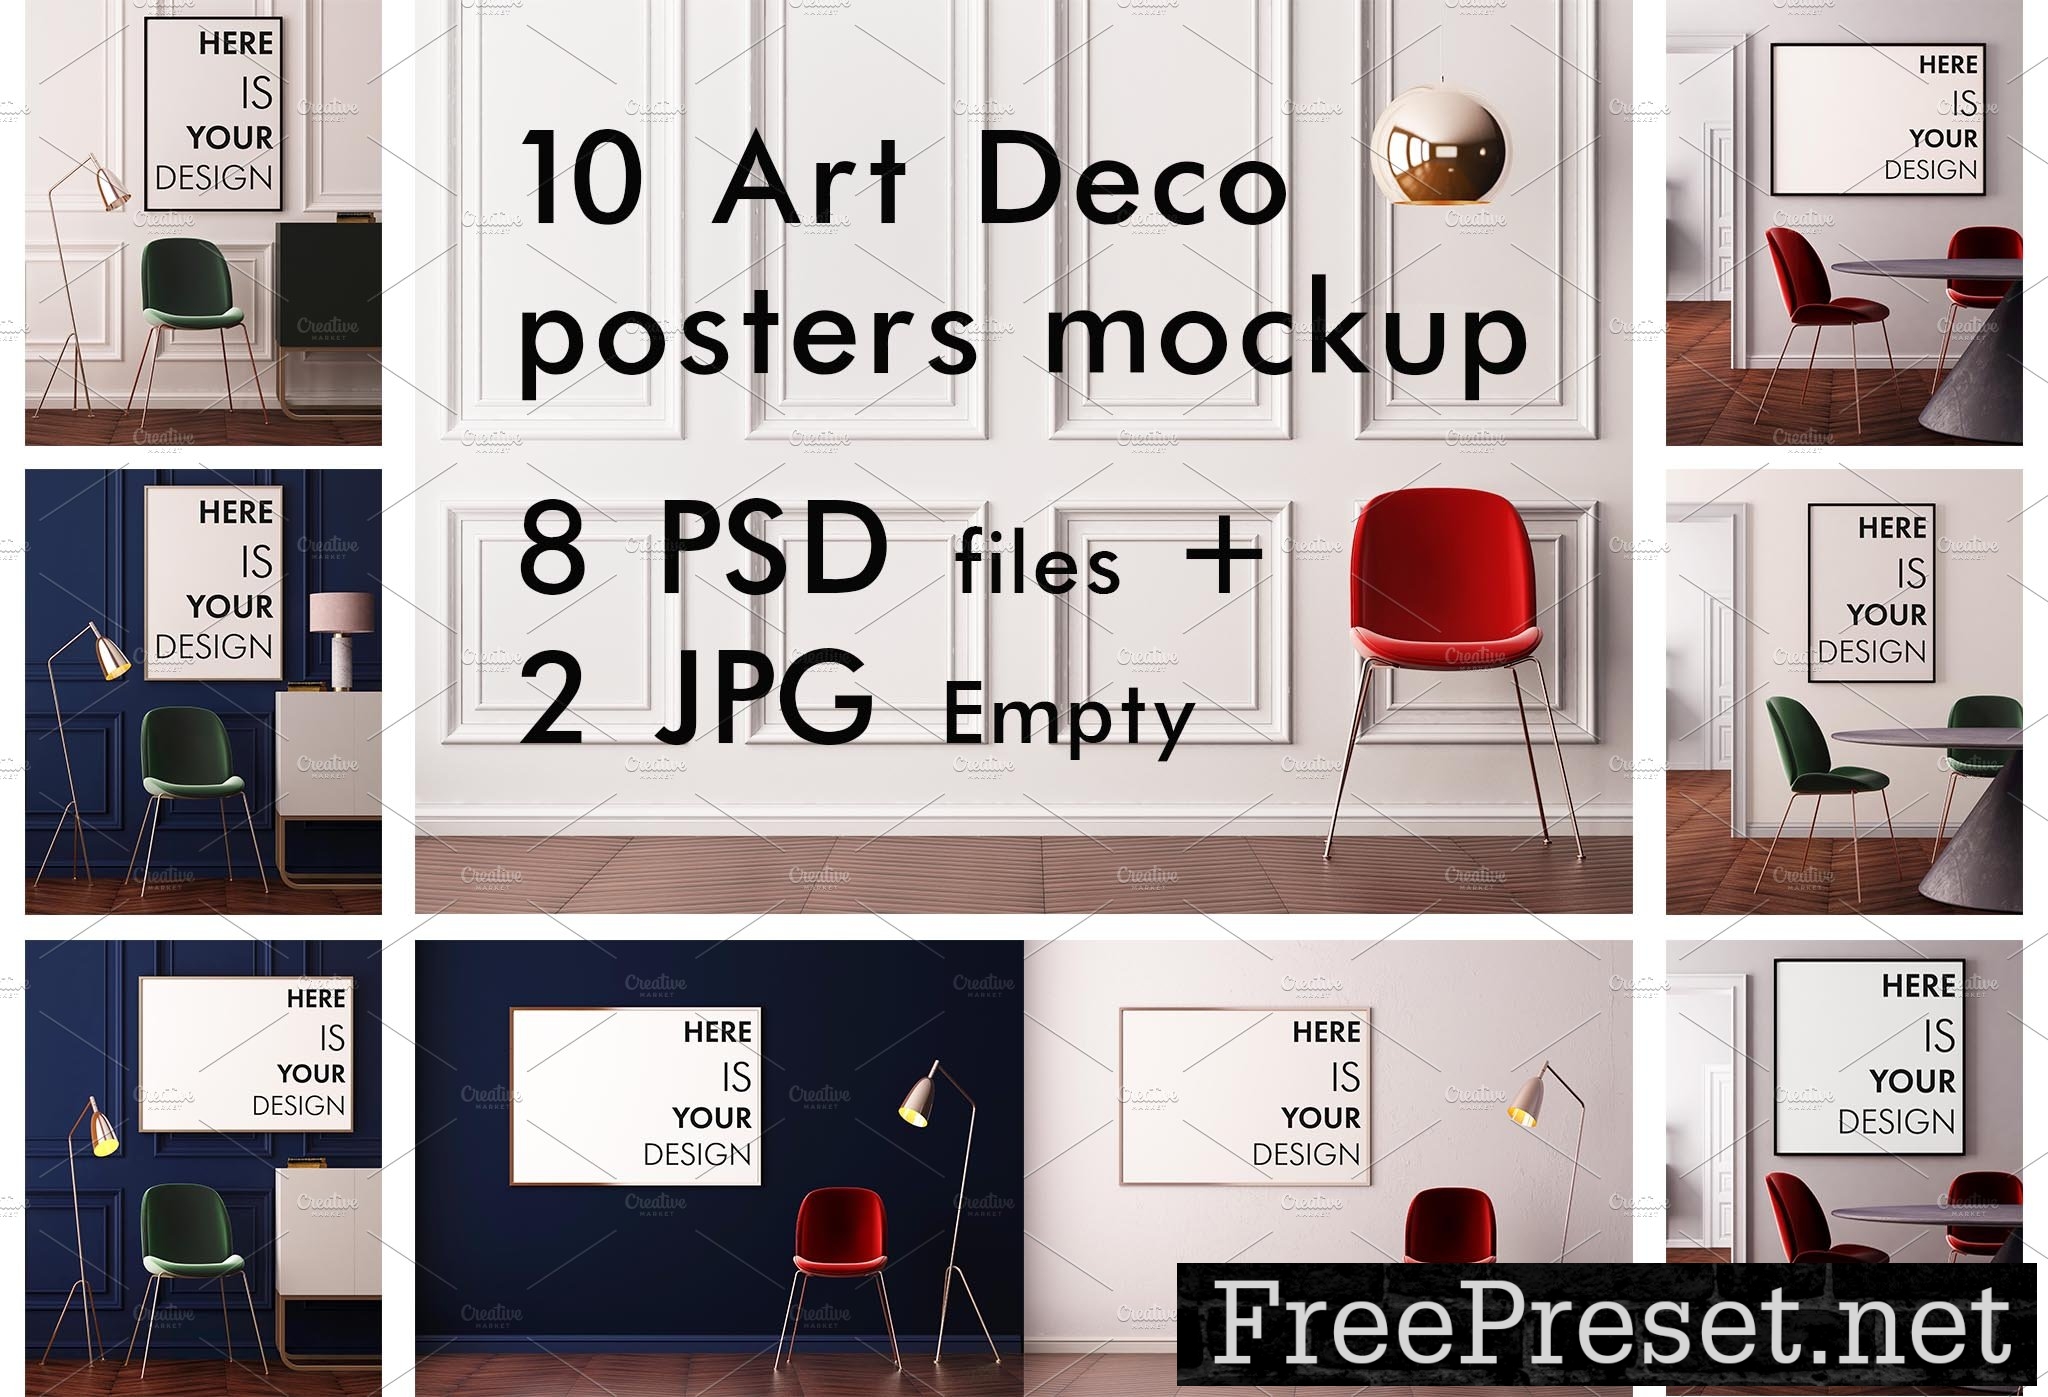 10 Art Deco posters mockup